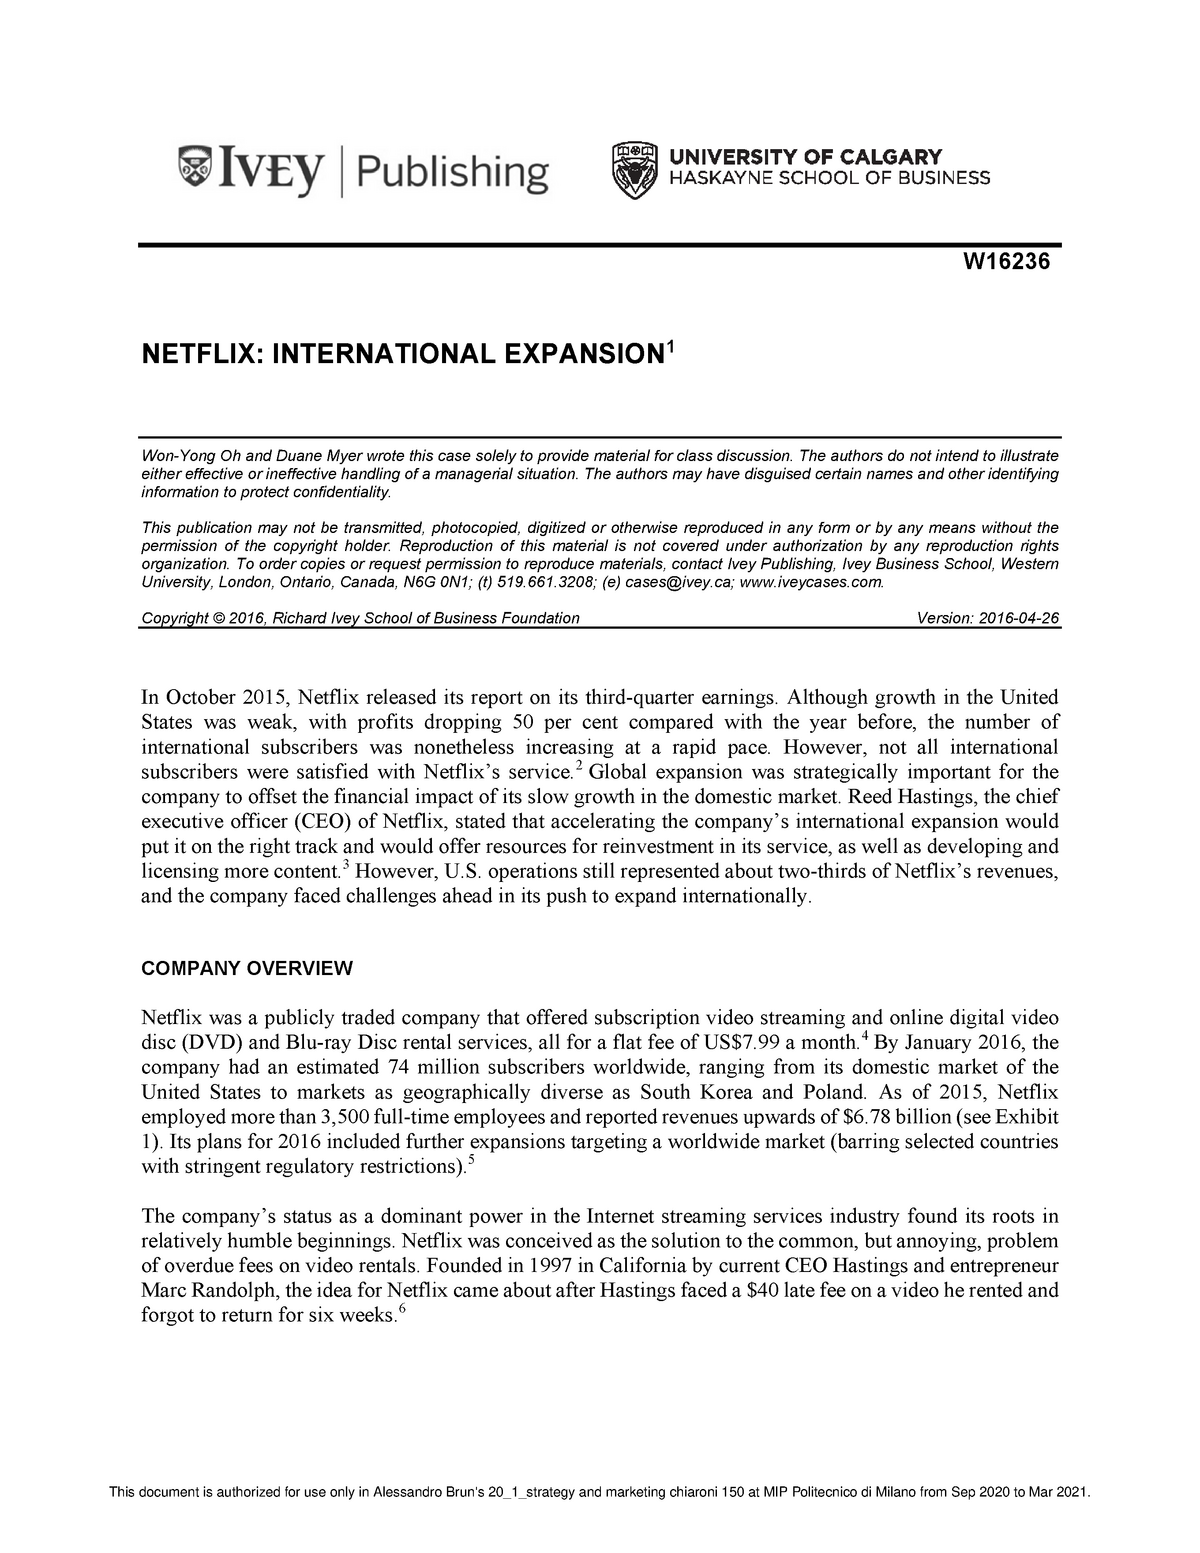 netflix international expansion case study solution pdf